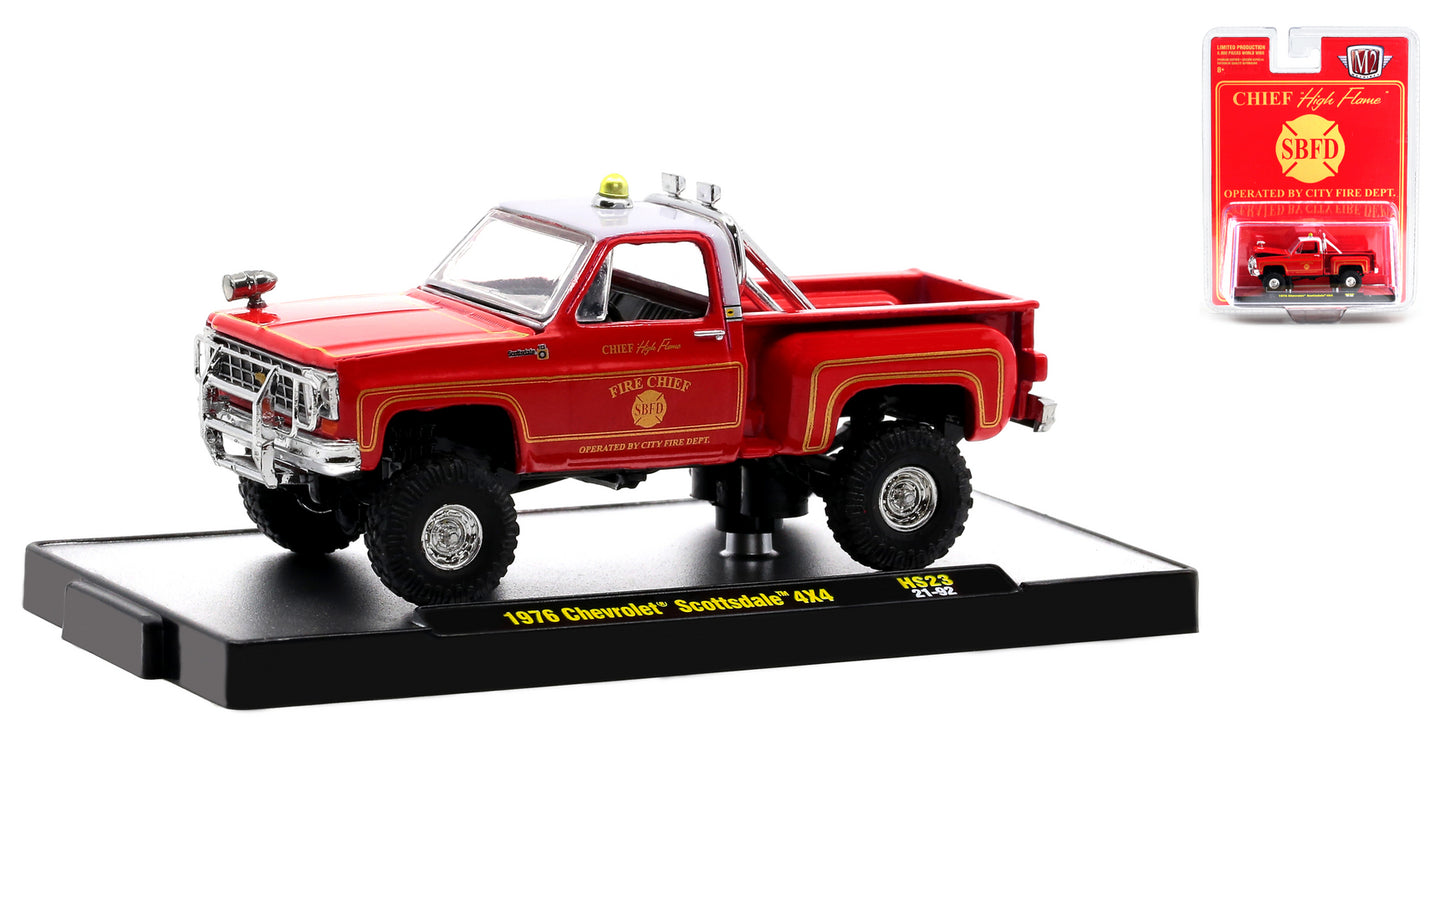 Release HS23 - 1976 Chevrolet Scottsdale 4X4 Fire Truck Die Cast Model